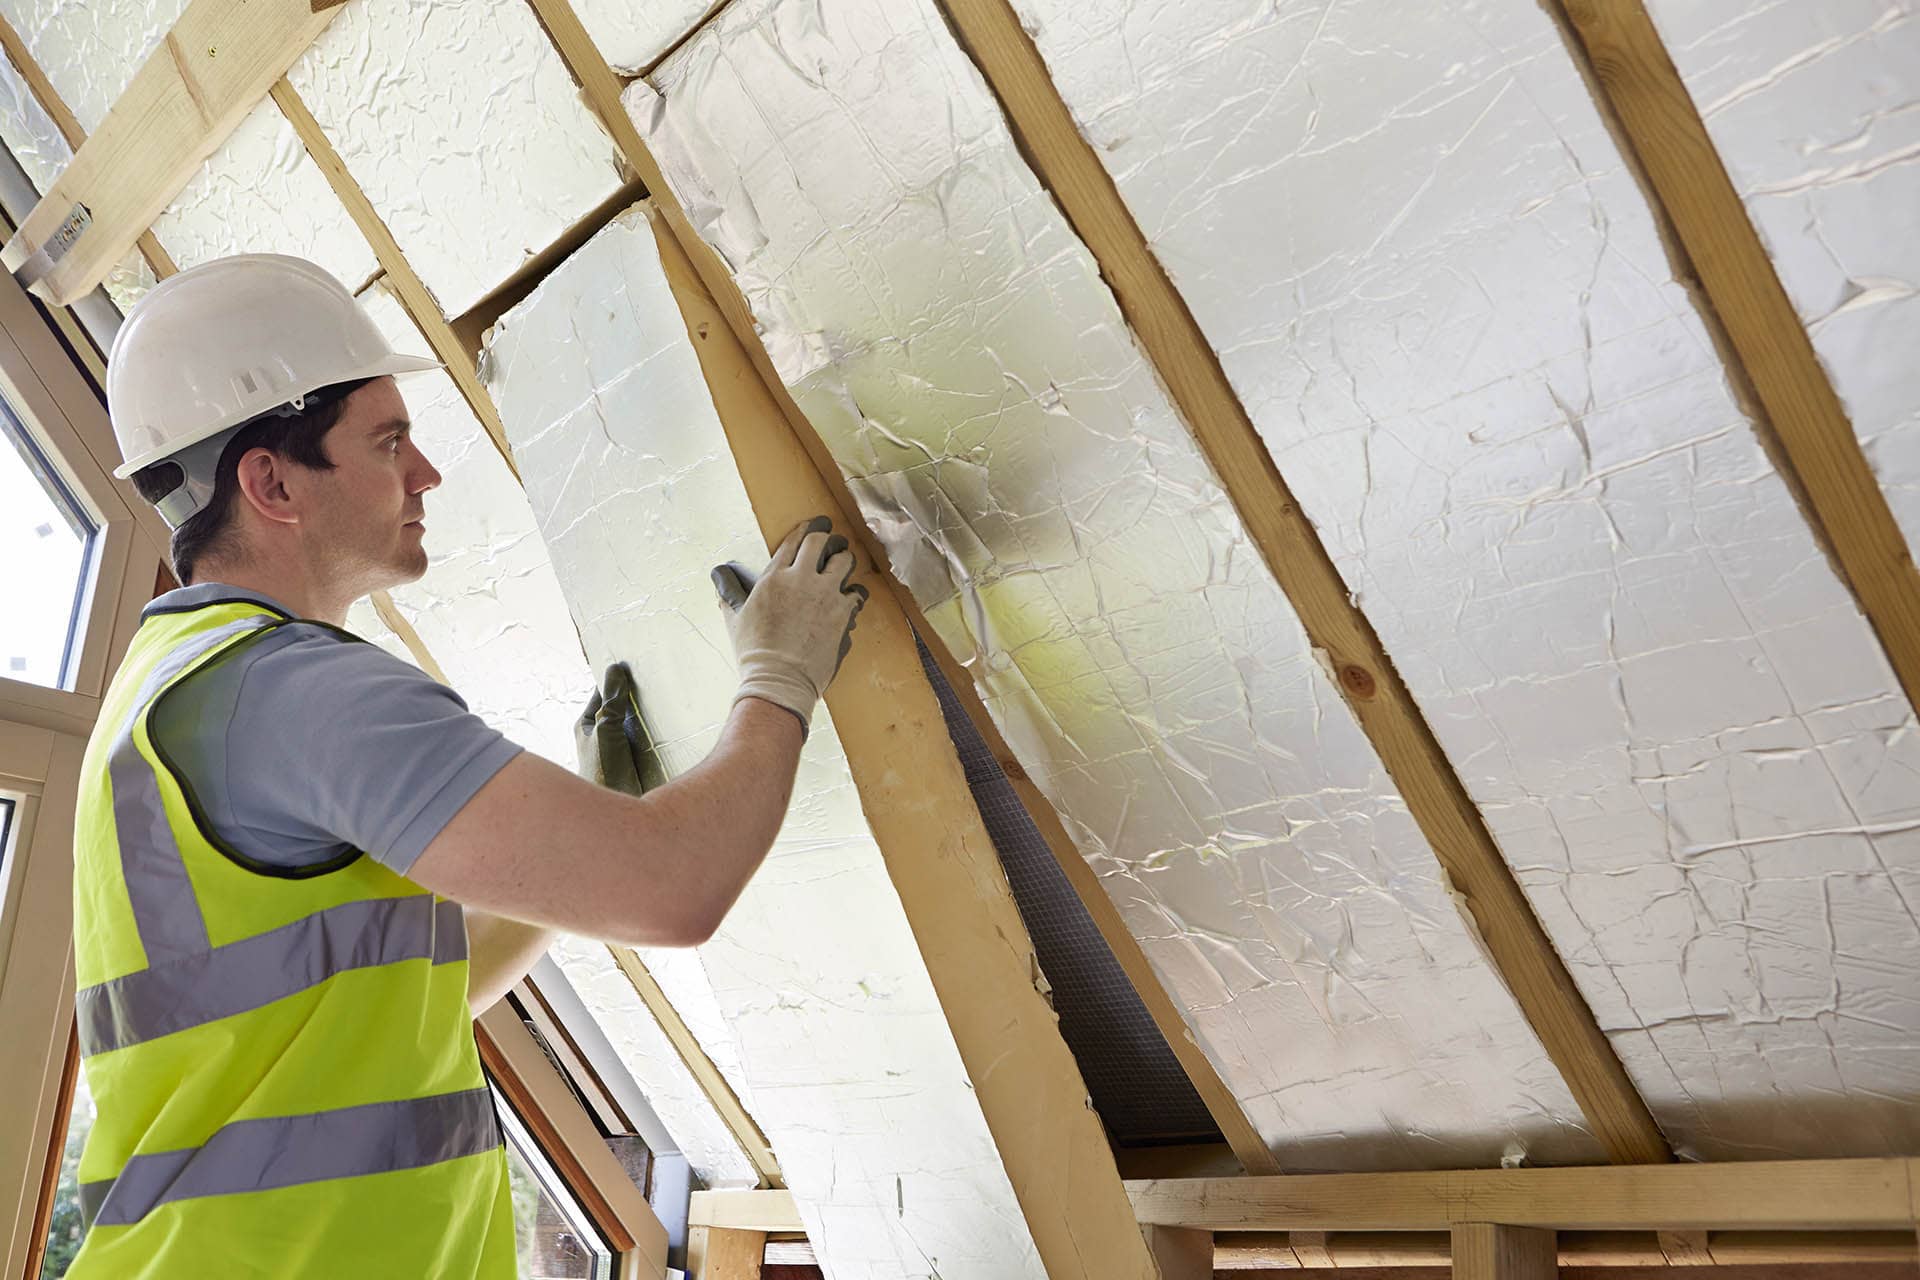 Builder installing block insulating board sheets - building materials